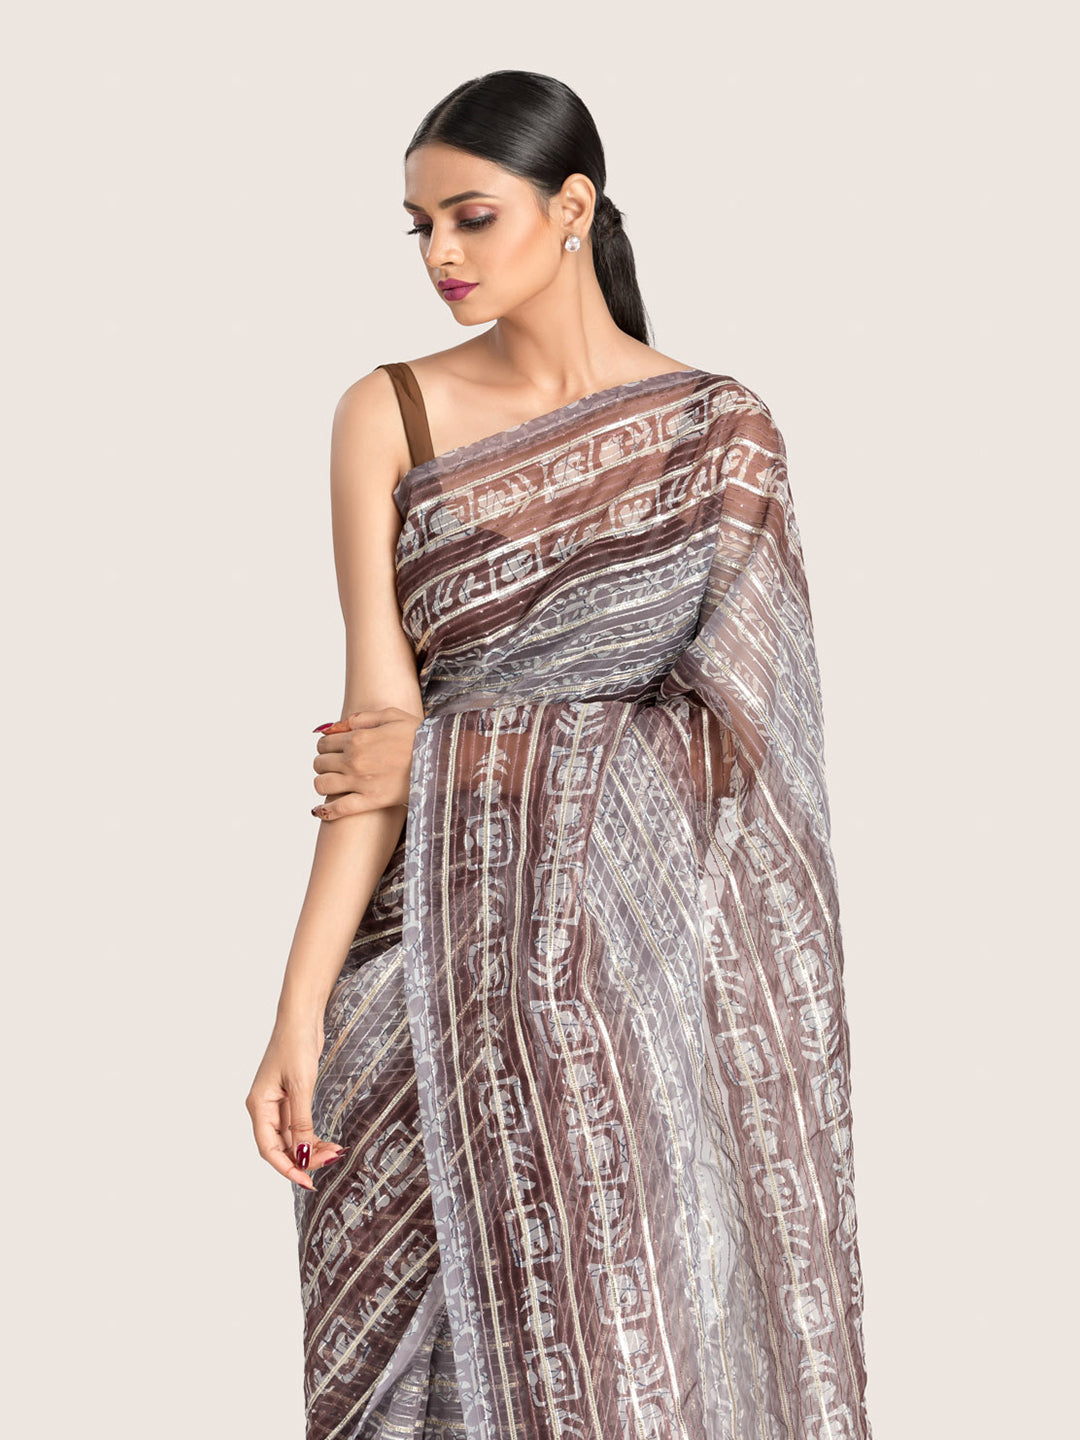 Brown & Grey Printed Organza Saree With Blouse Fabric